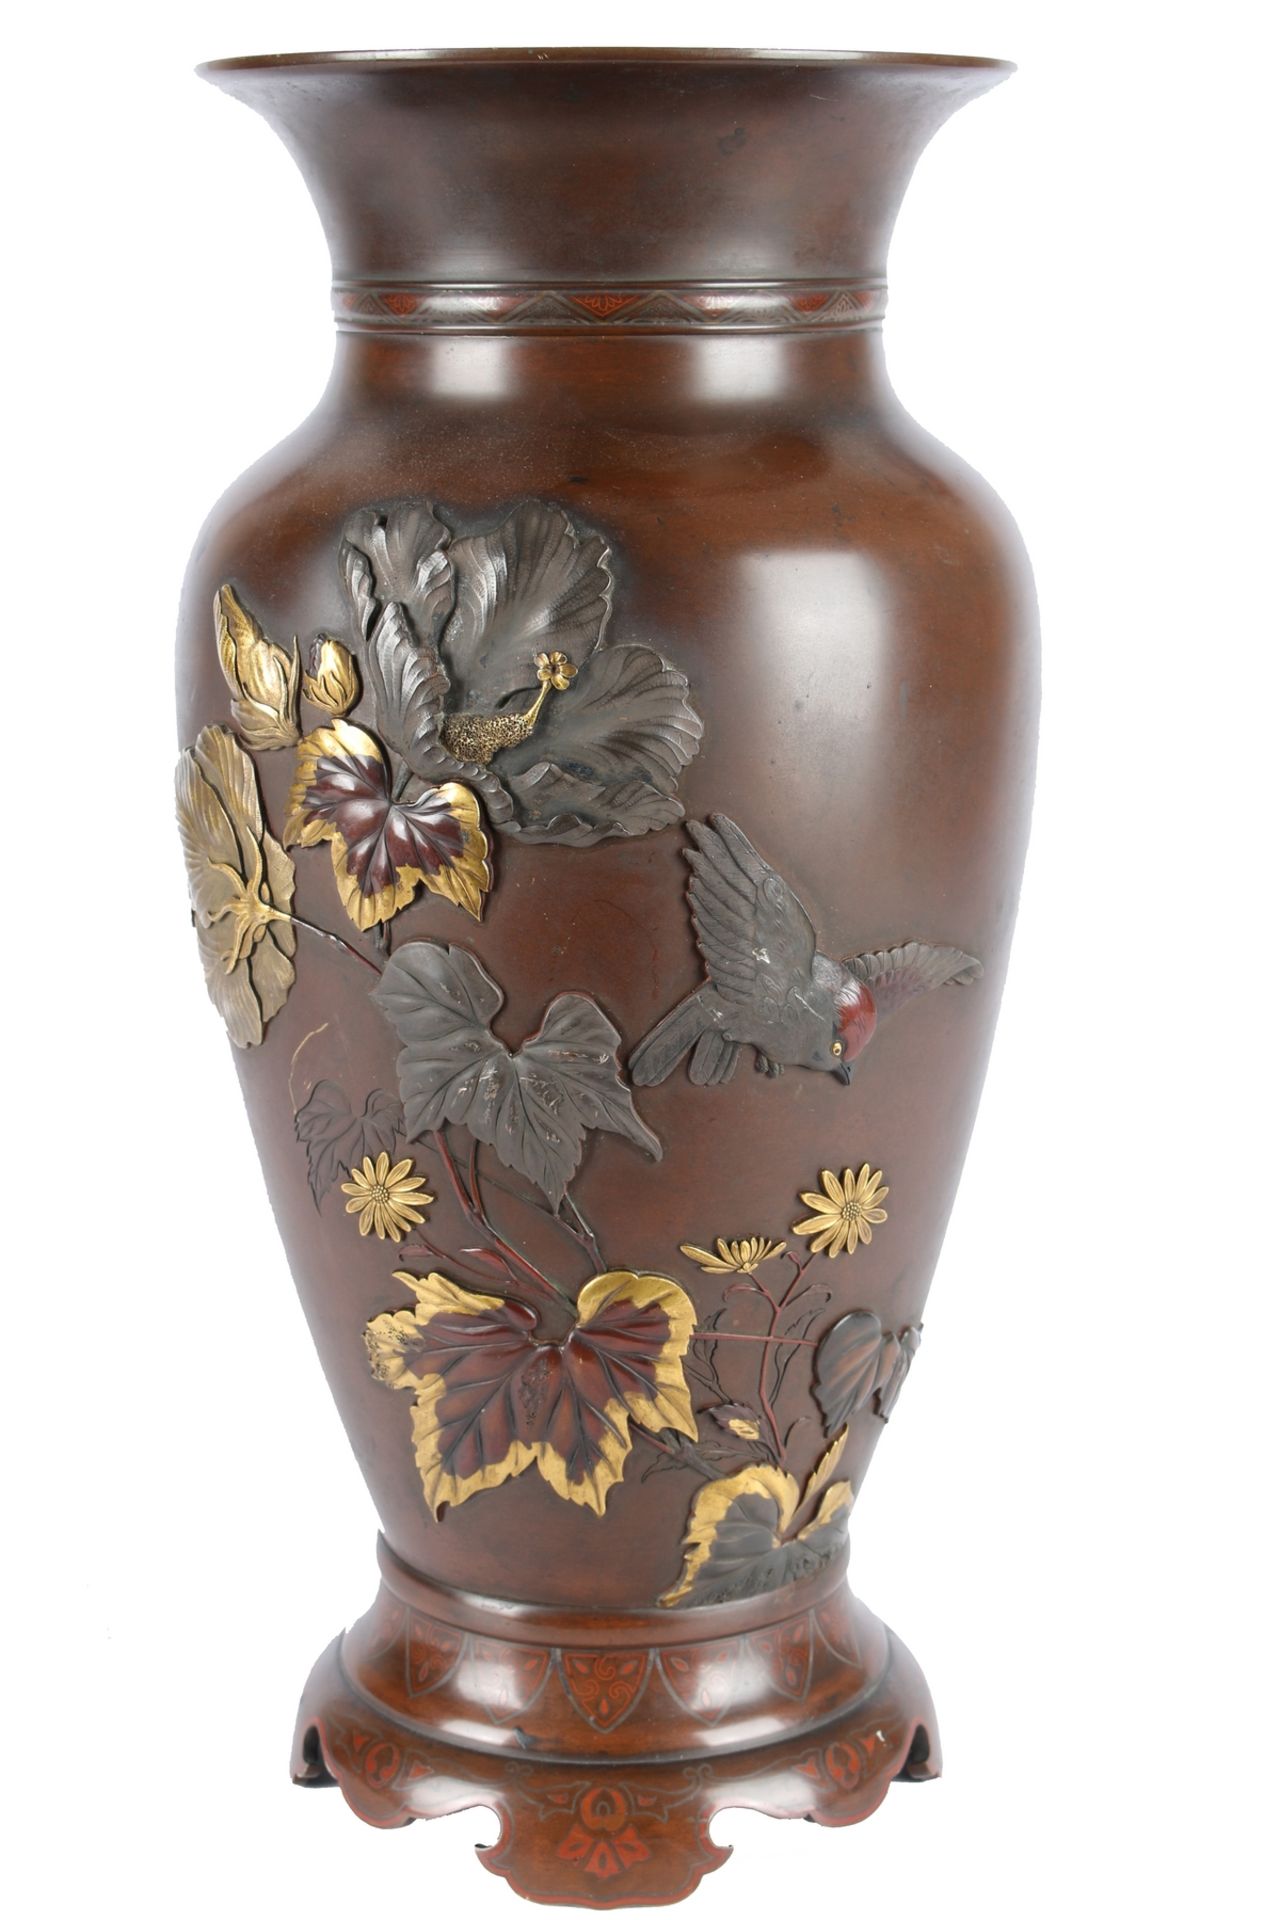 Japan Bronze Vase, Meiji-Period (1868-1912) japanese vase,